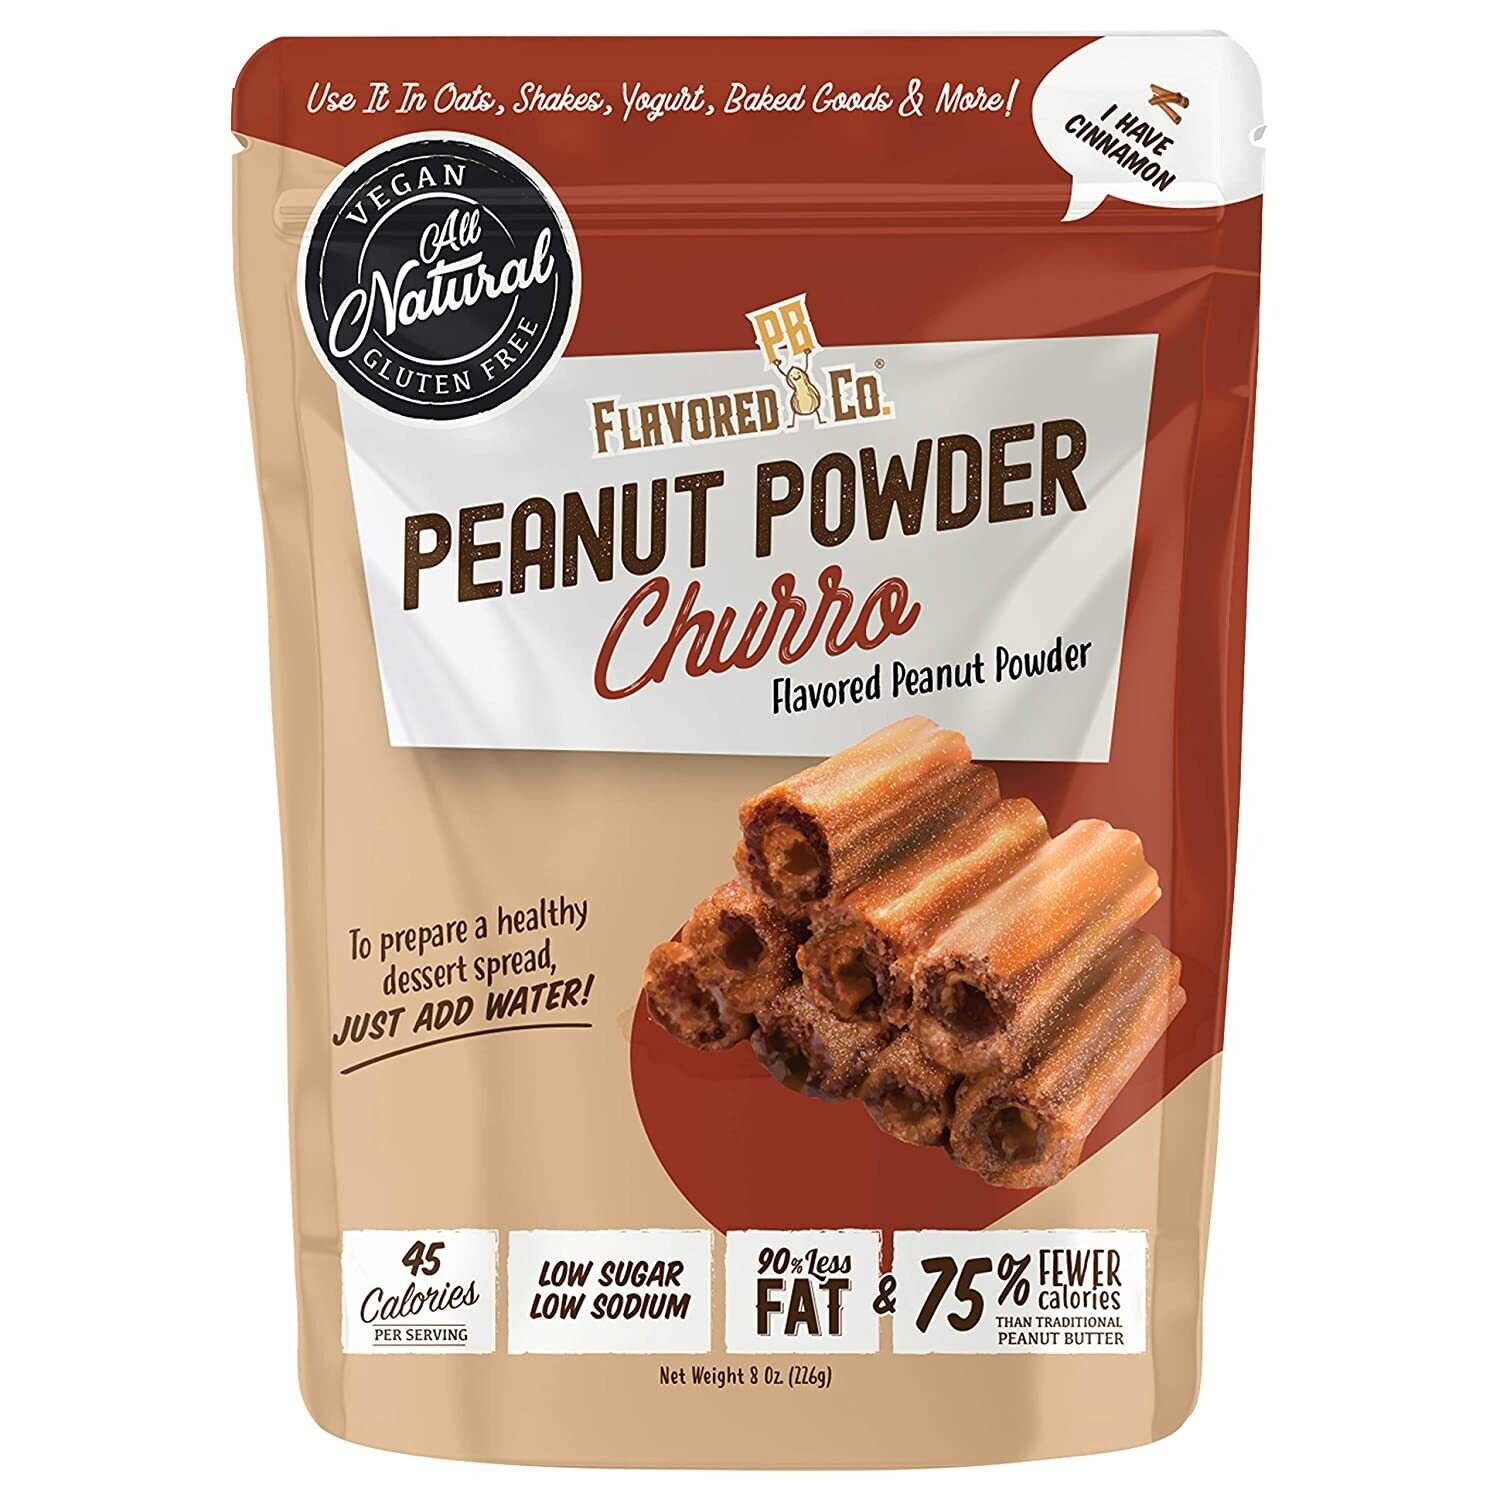 Flavored PB Co. Peanut Powder Churro